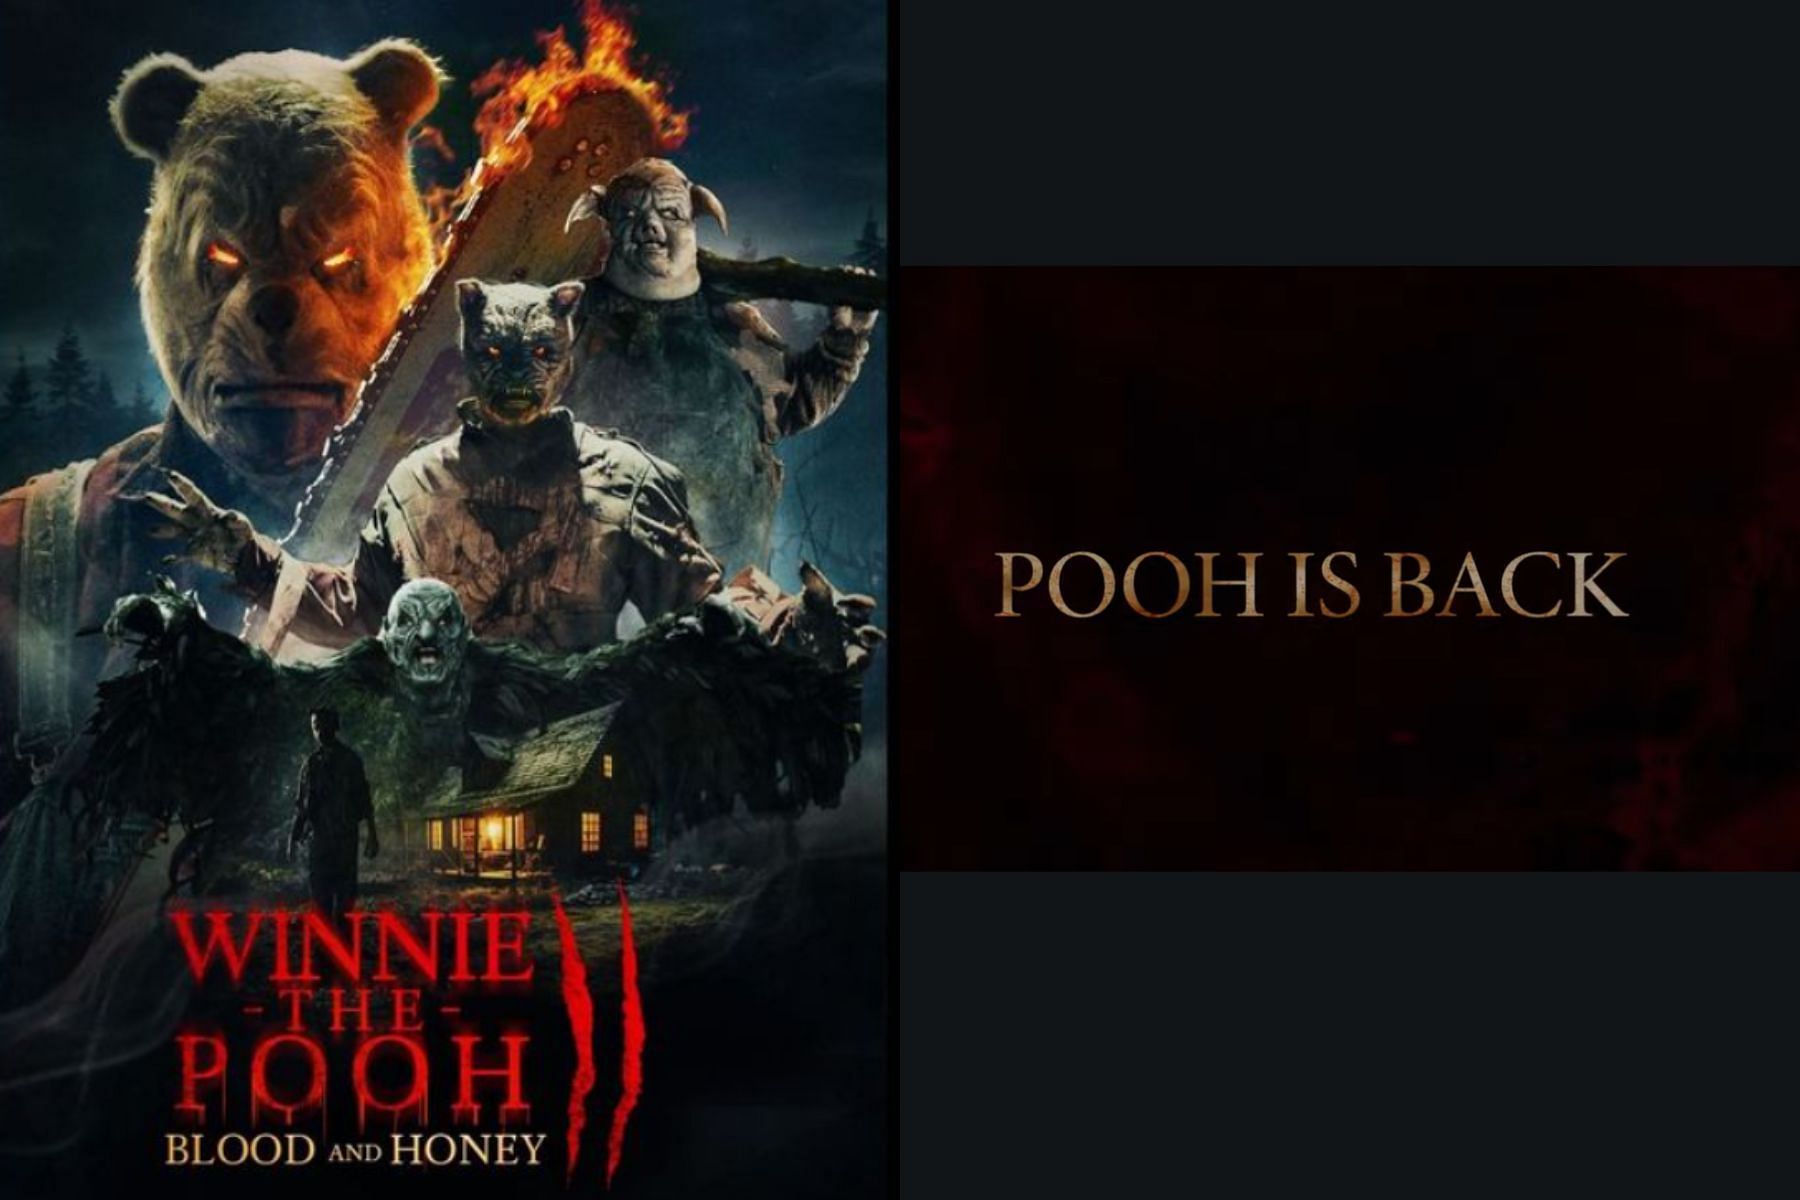 Official poster (Images via Left: Instagram @poohbloodandhoney &amp; Right: Fathomevents)